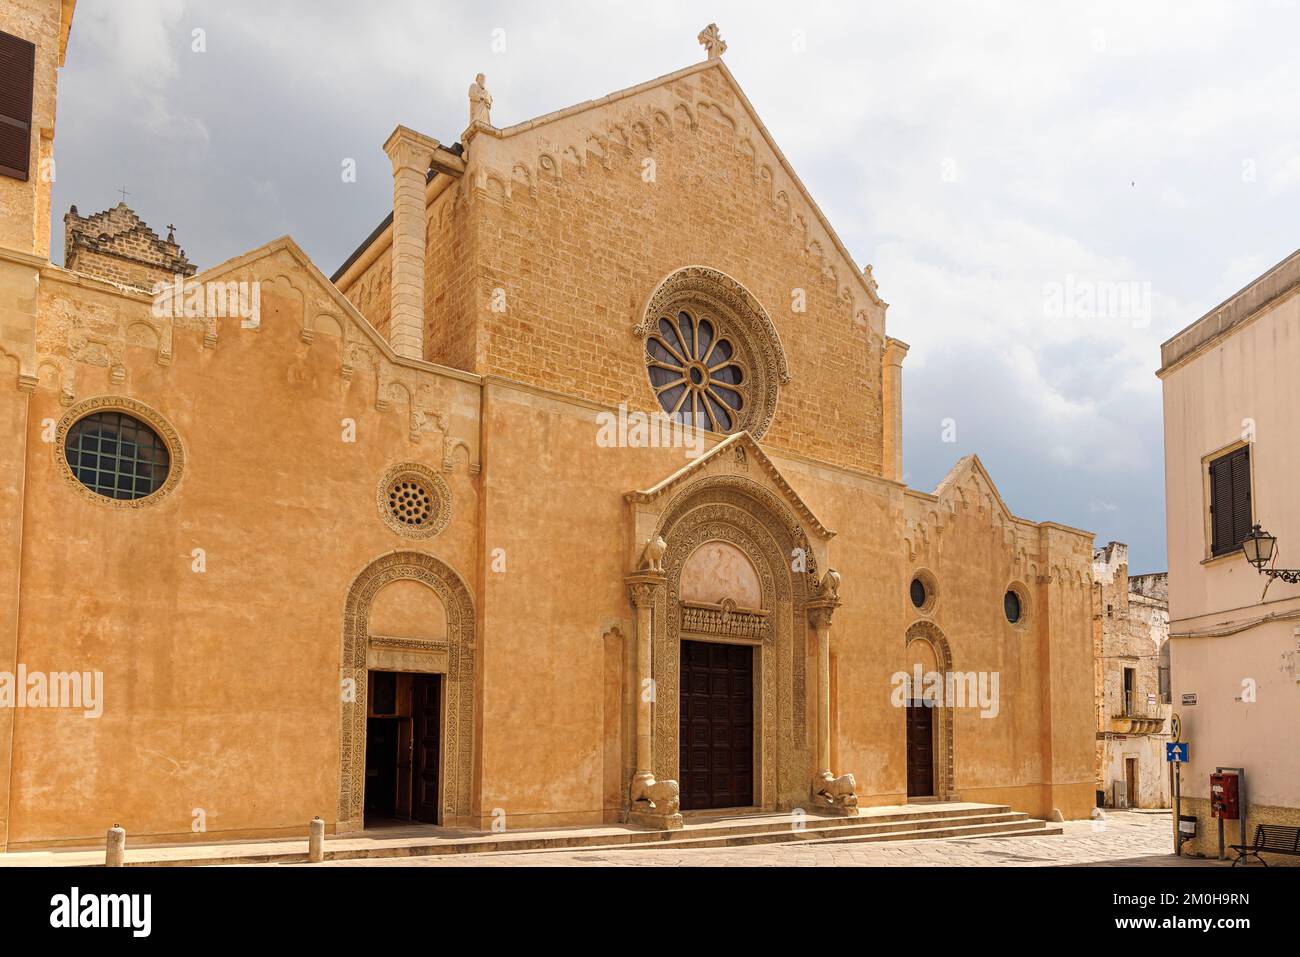 Italy, Apulia, Galatina, Basilica di Santa Caterina d'Alessandria Stock Photo